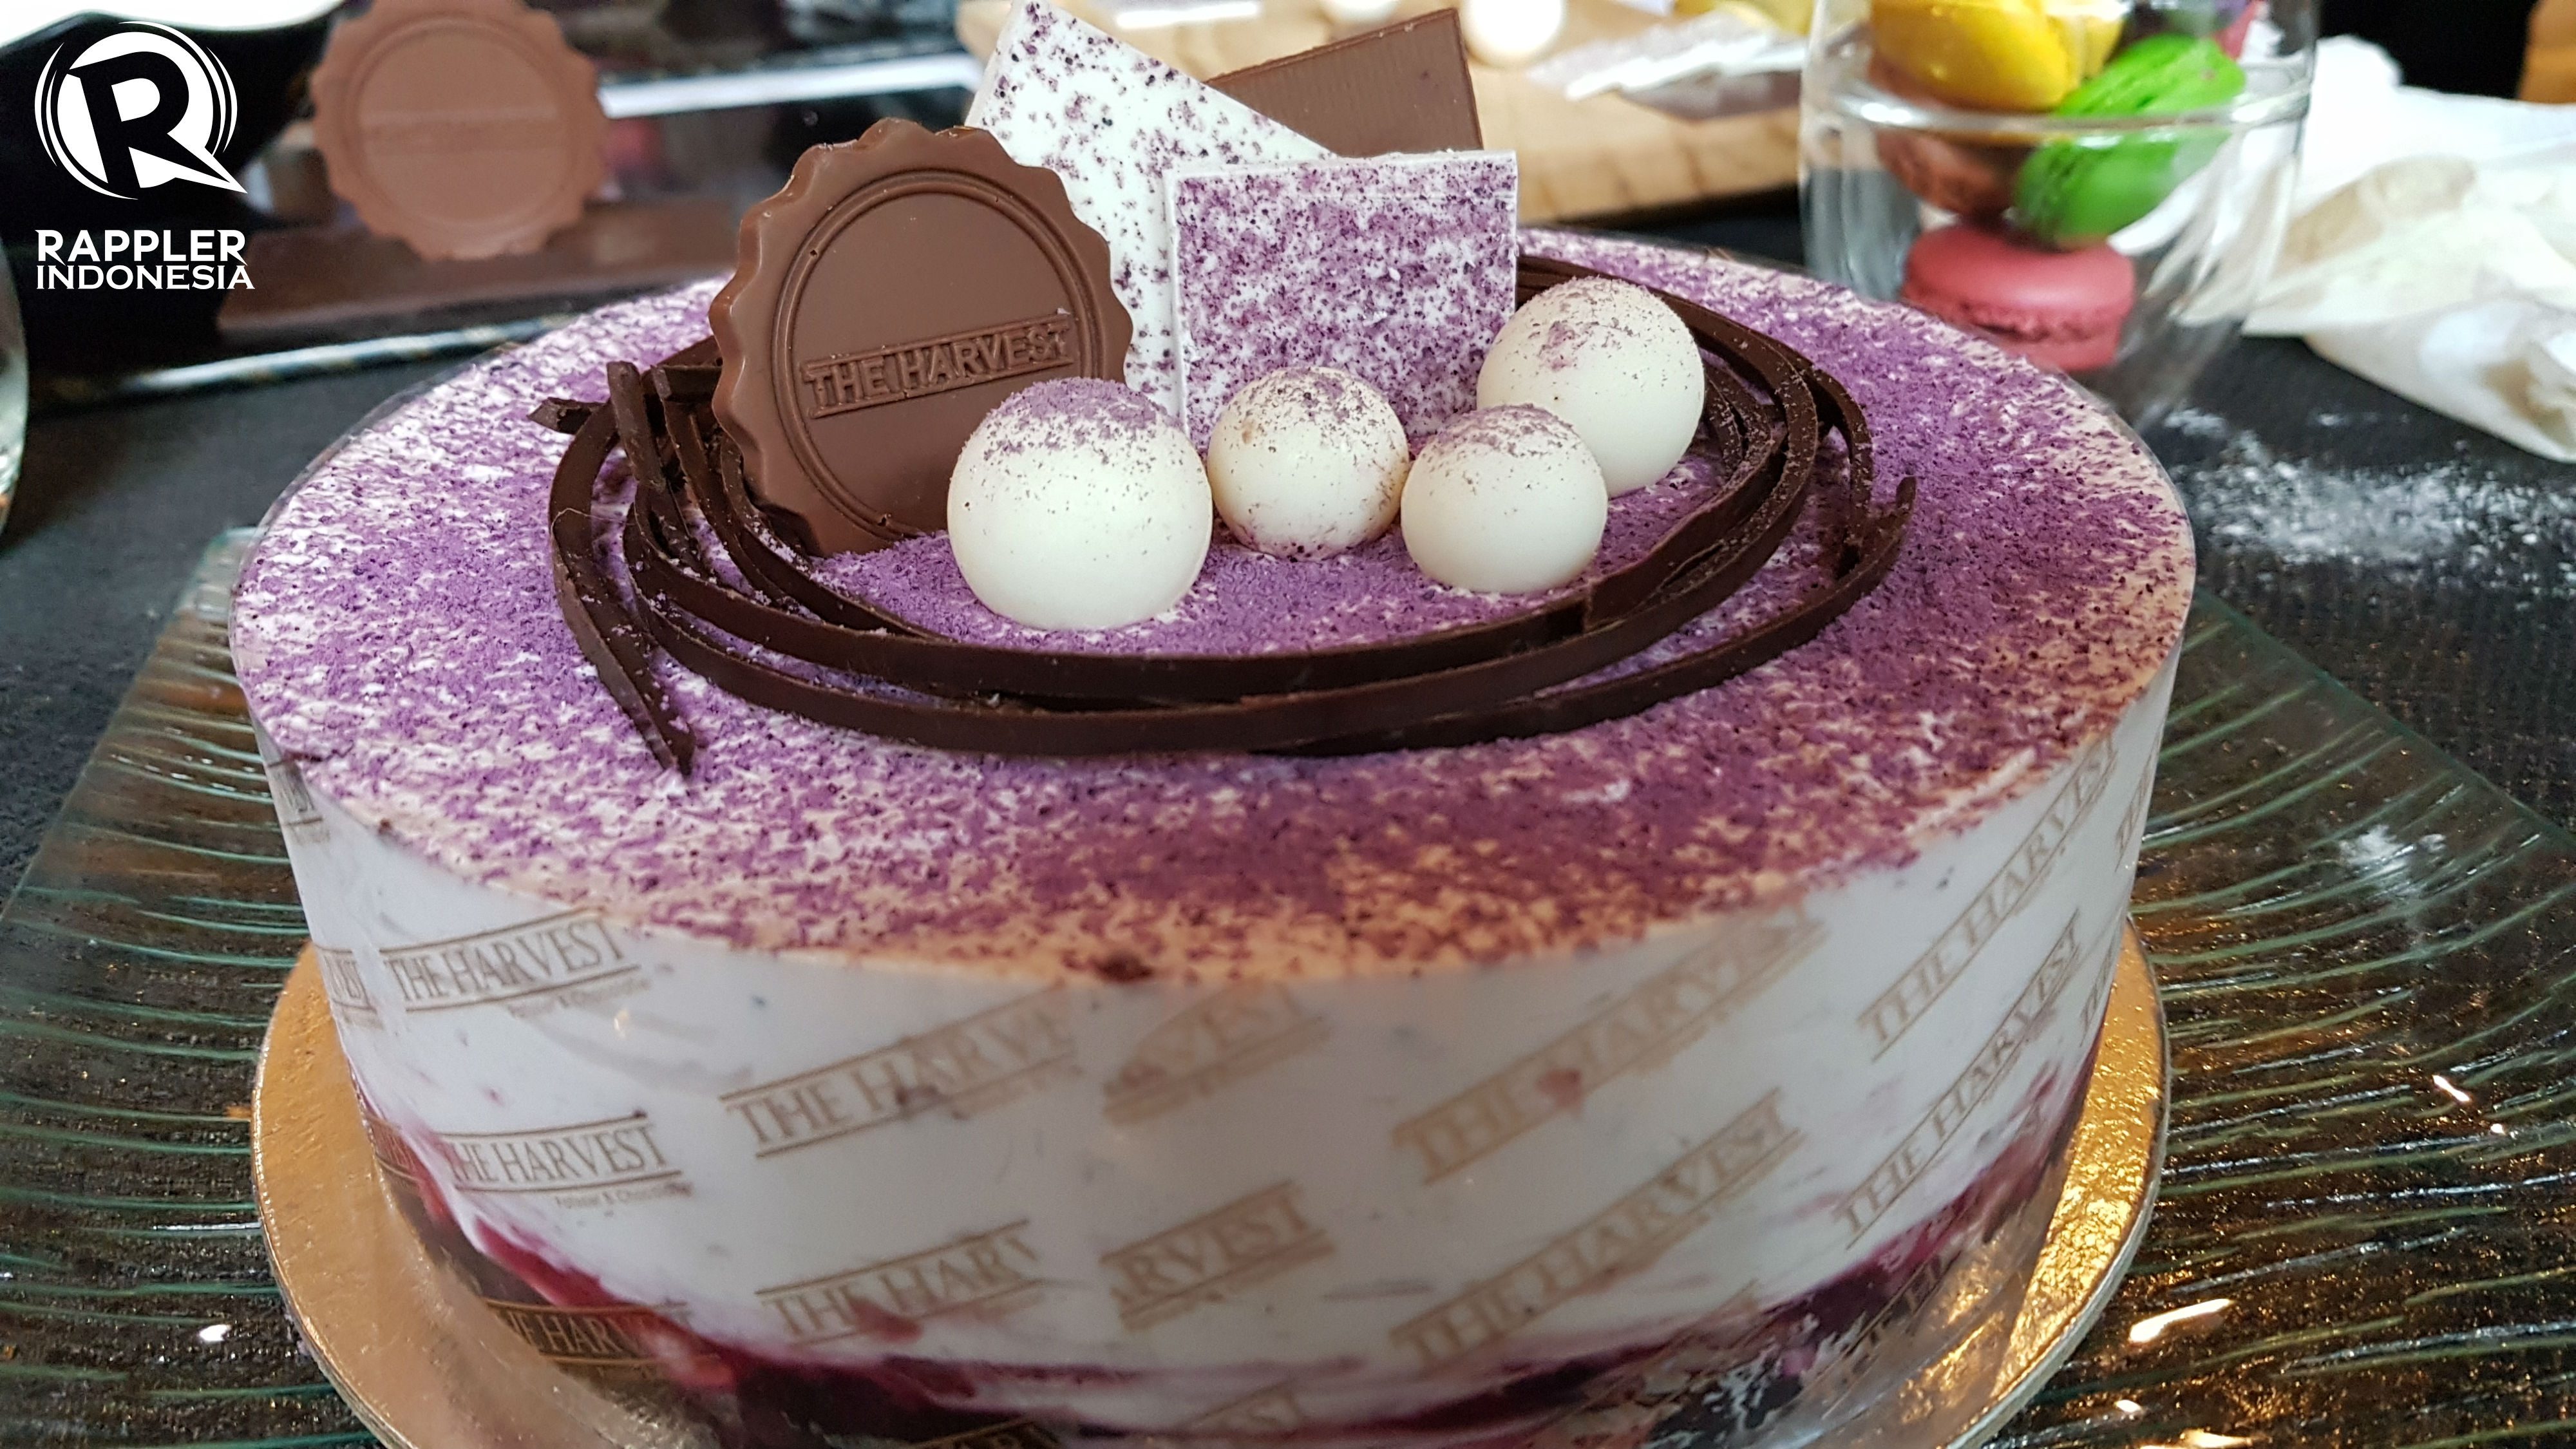 The Harvest Blueberry Bloom Cake merupakan paduan kue sponge cokelat dengan blueberry cream mousse. Foto oleh Sakinah Ummu Haniy/Rappler 